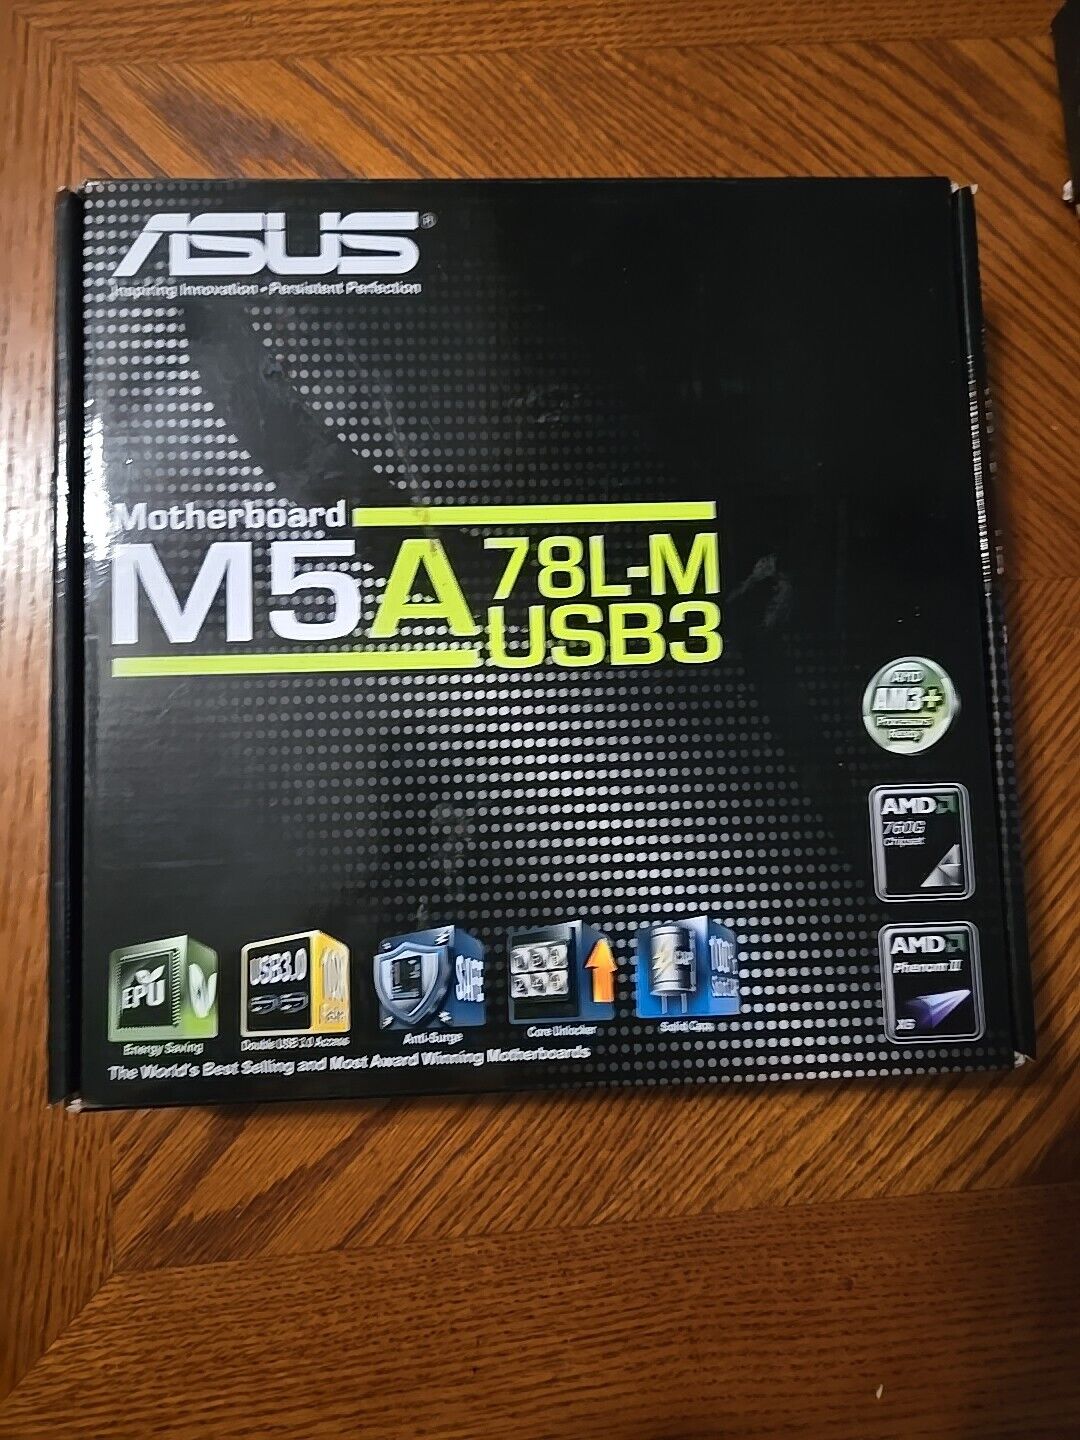 ASUS M5A78L-M PLUS/USB3 AM3, AMD Motherboard